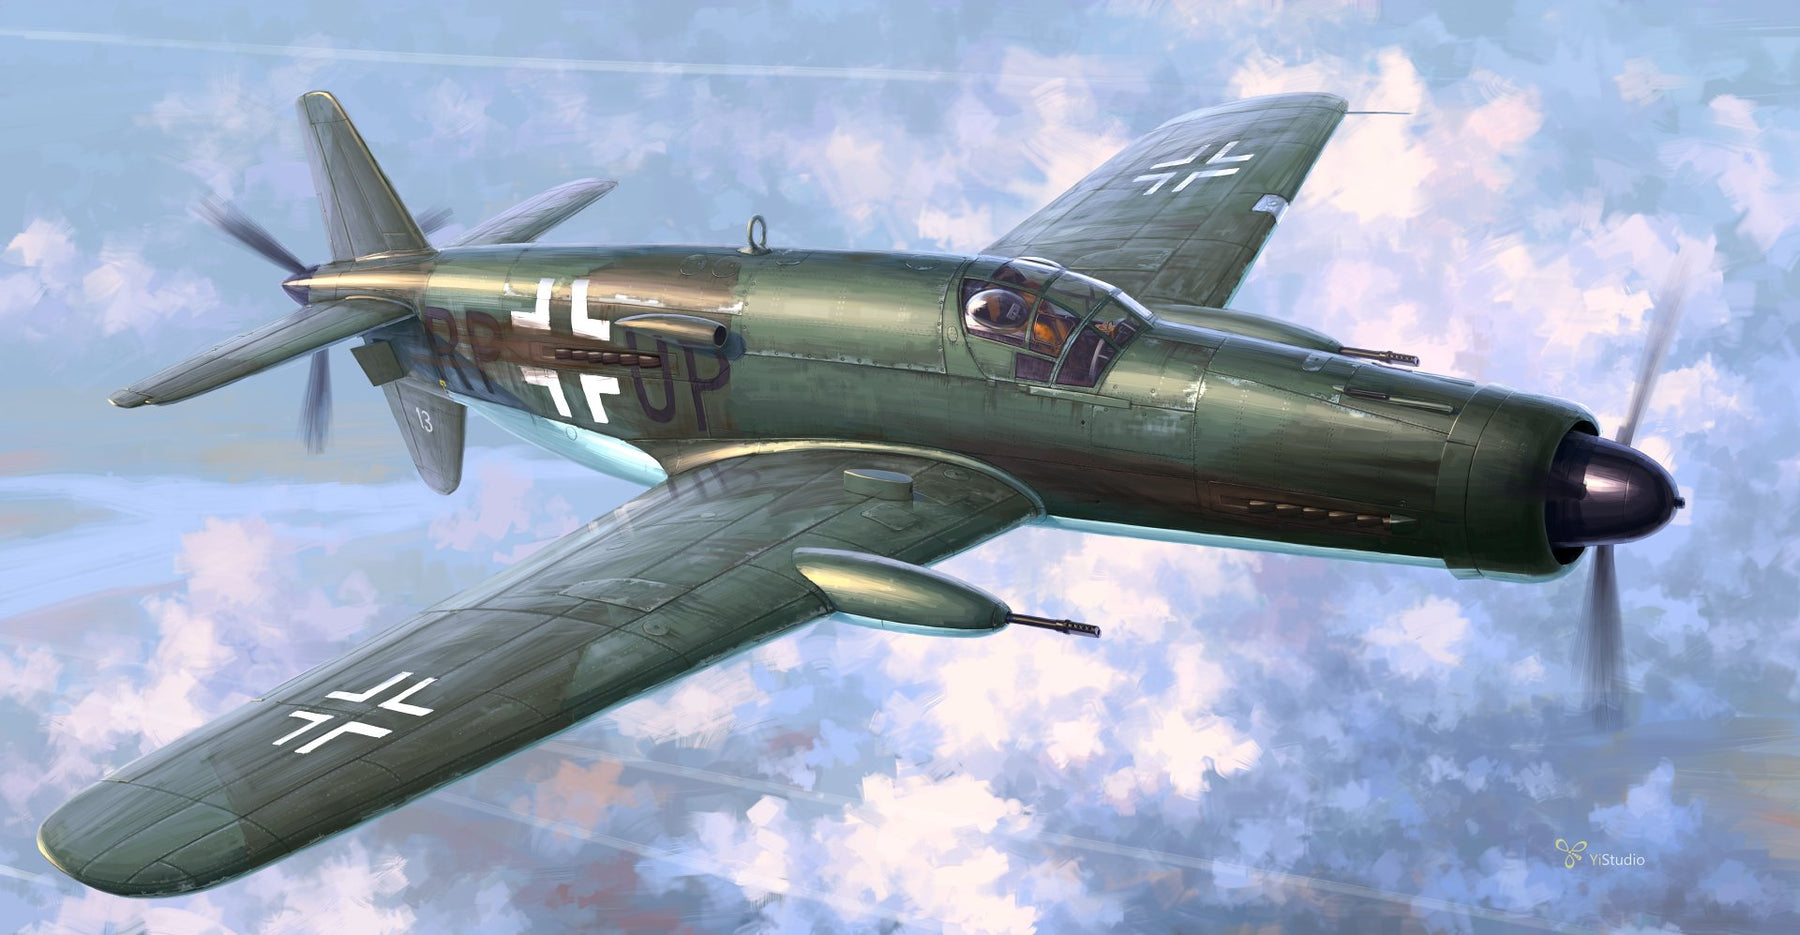 1/32 WWII LEFTWAFFE DORNIER DO335 B-2 "ZERSTORER"